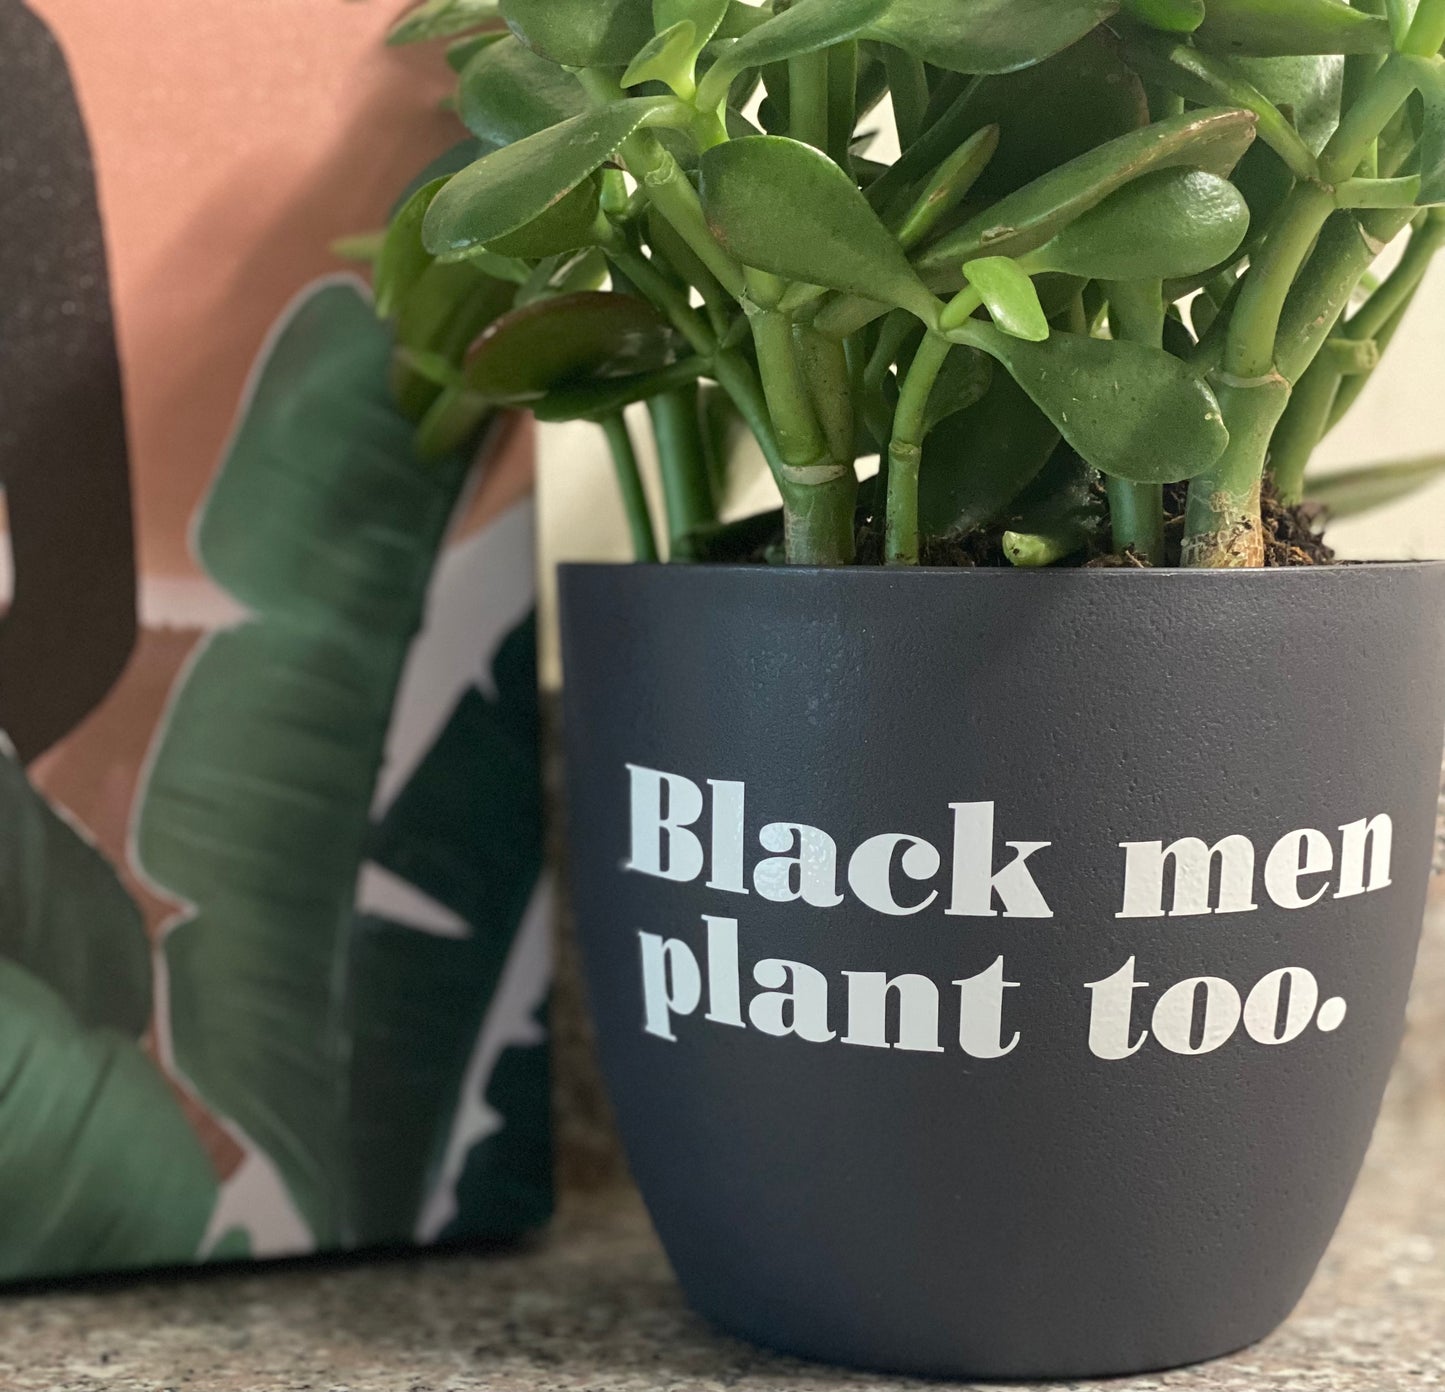 Black men plant too.